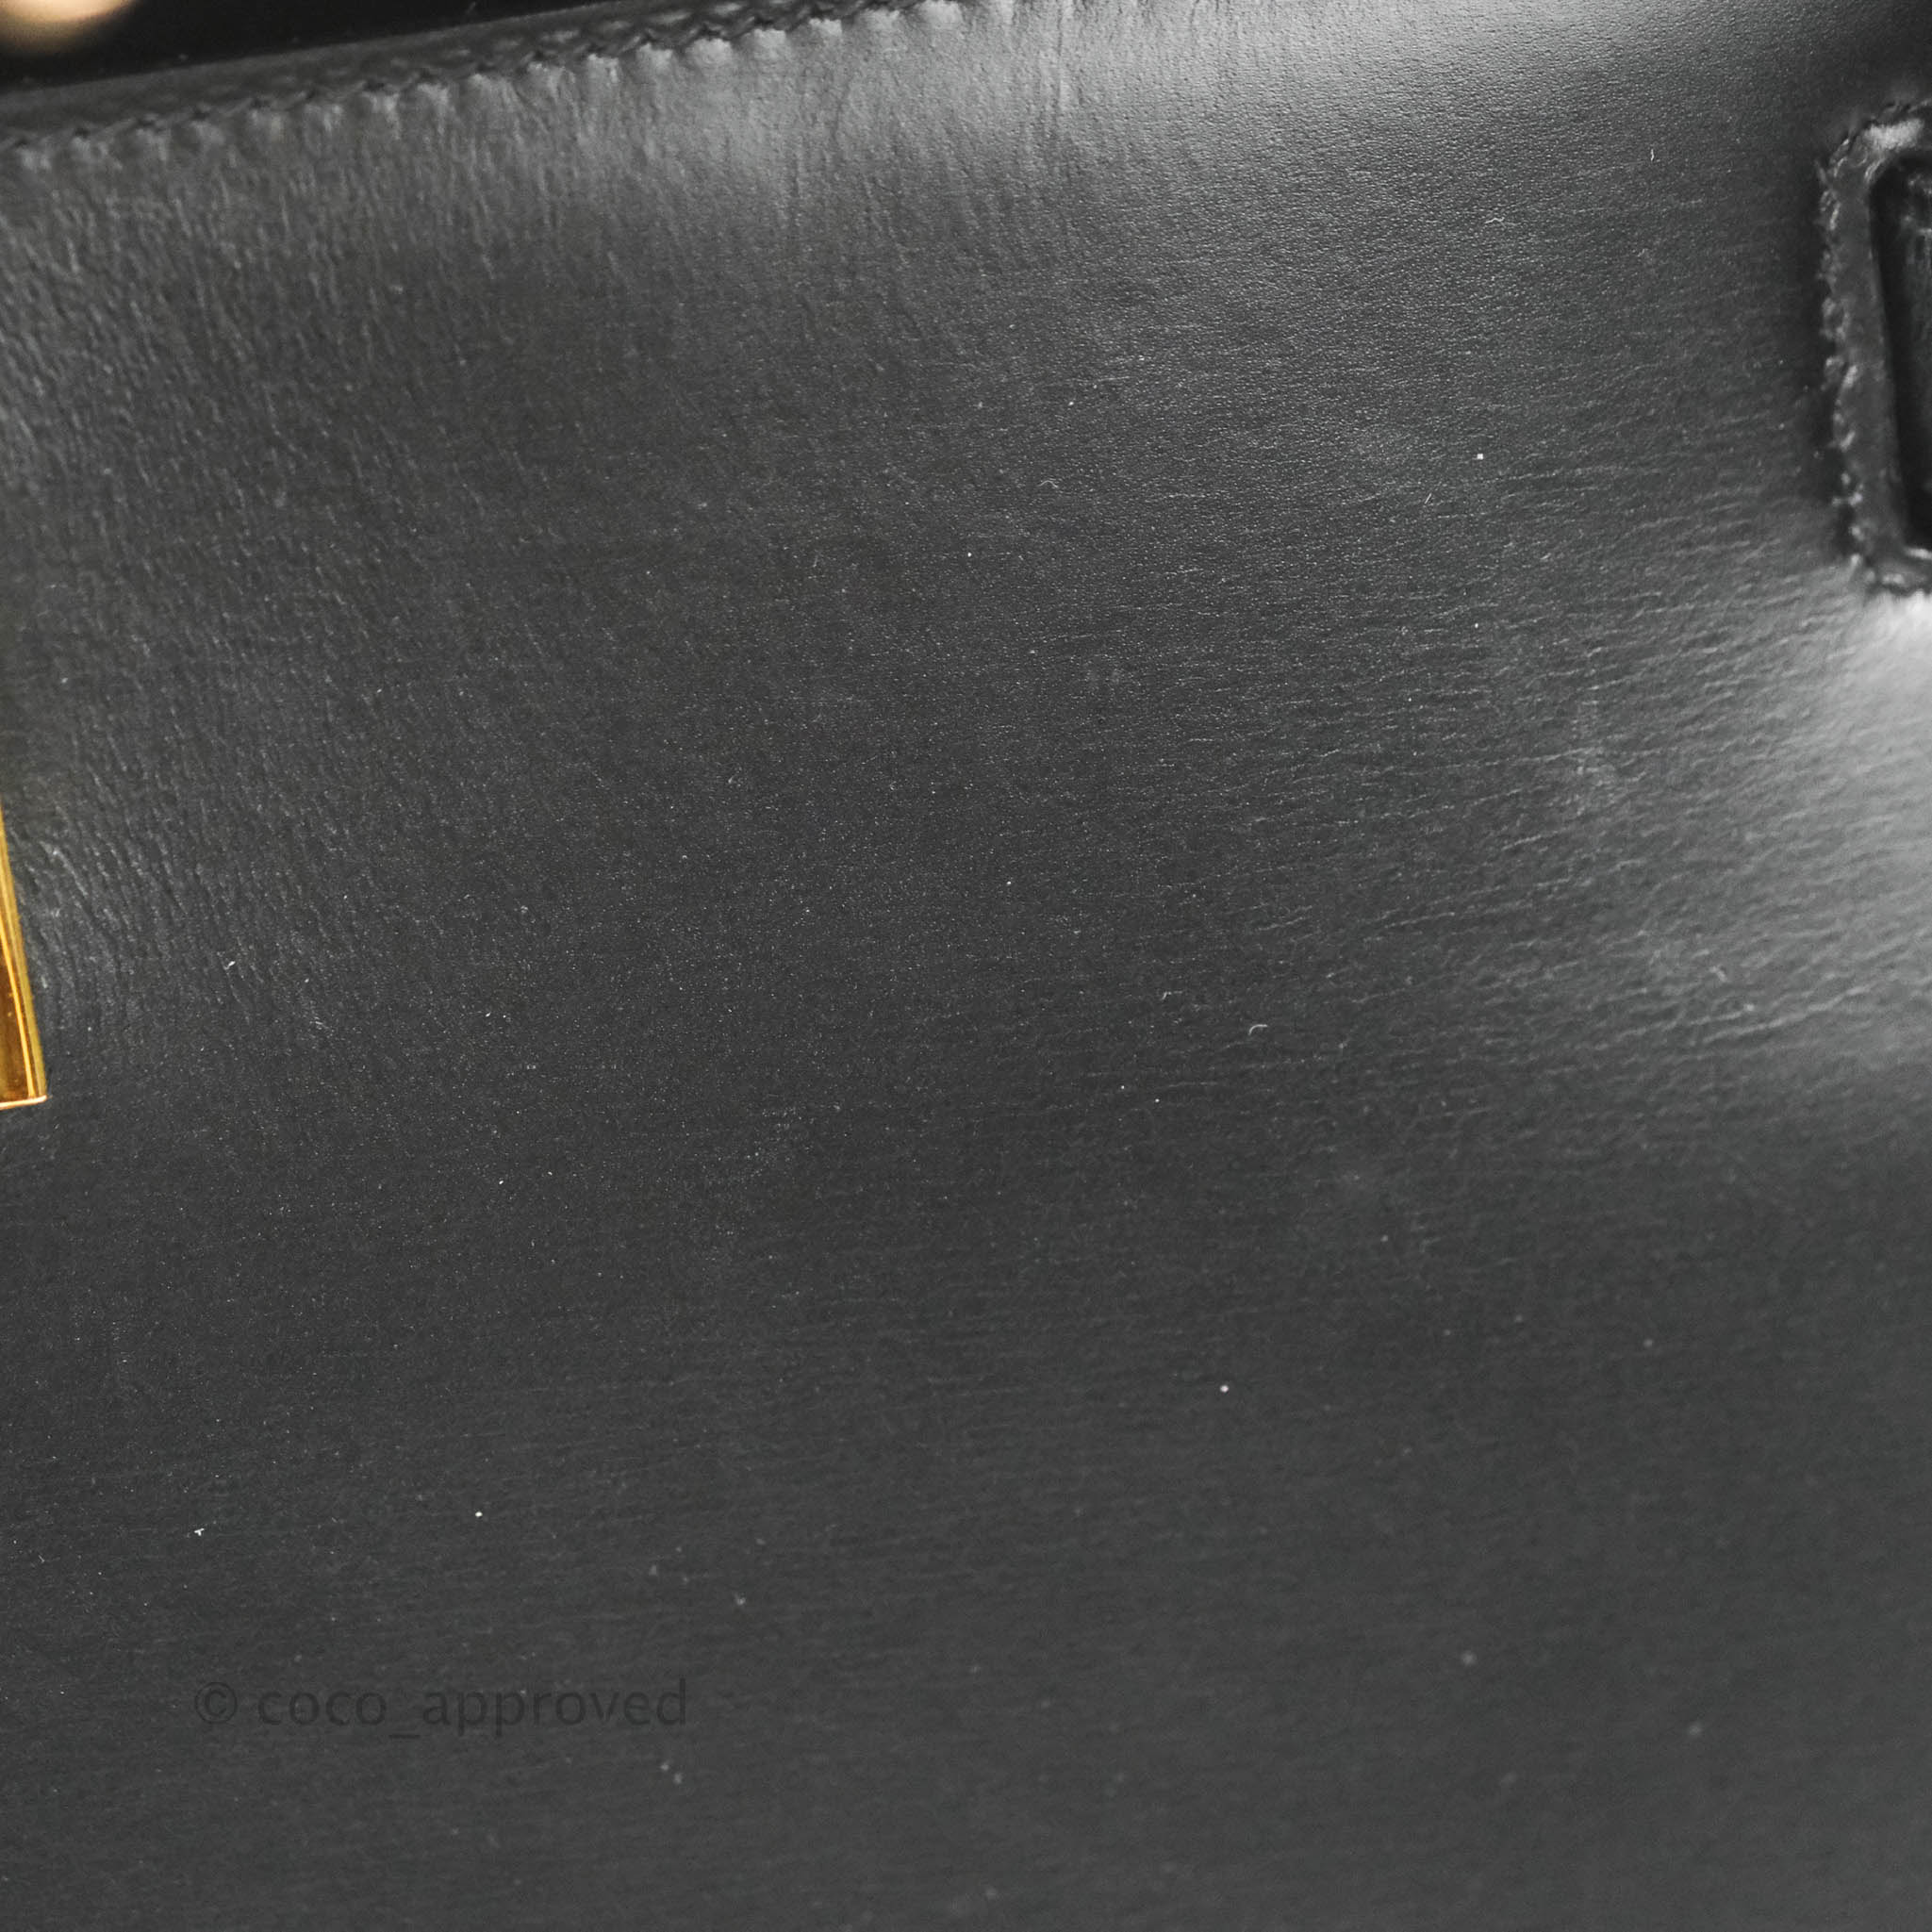 Hermès Kelly 28 Vintage Sellier Black Box Leather Gold Hardware